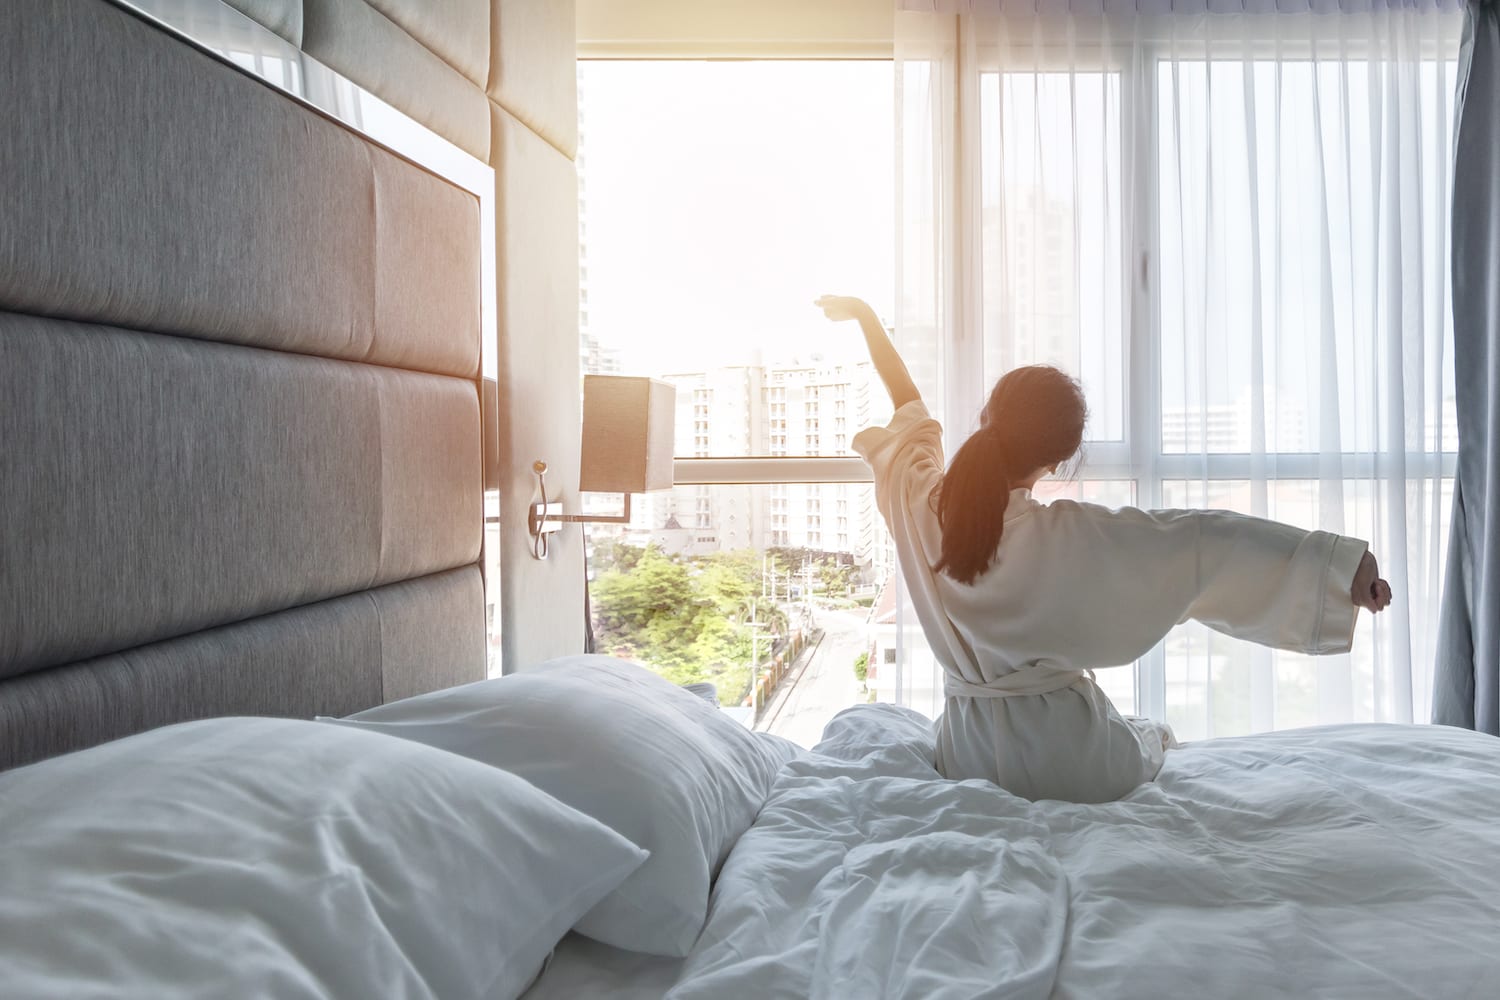 Sleep Force Mom Beeg Porn - How to Get a Good Night's Sleep in a Hotel | Sleep Foundation